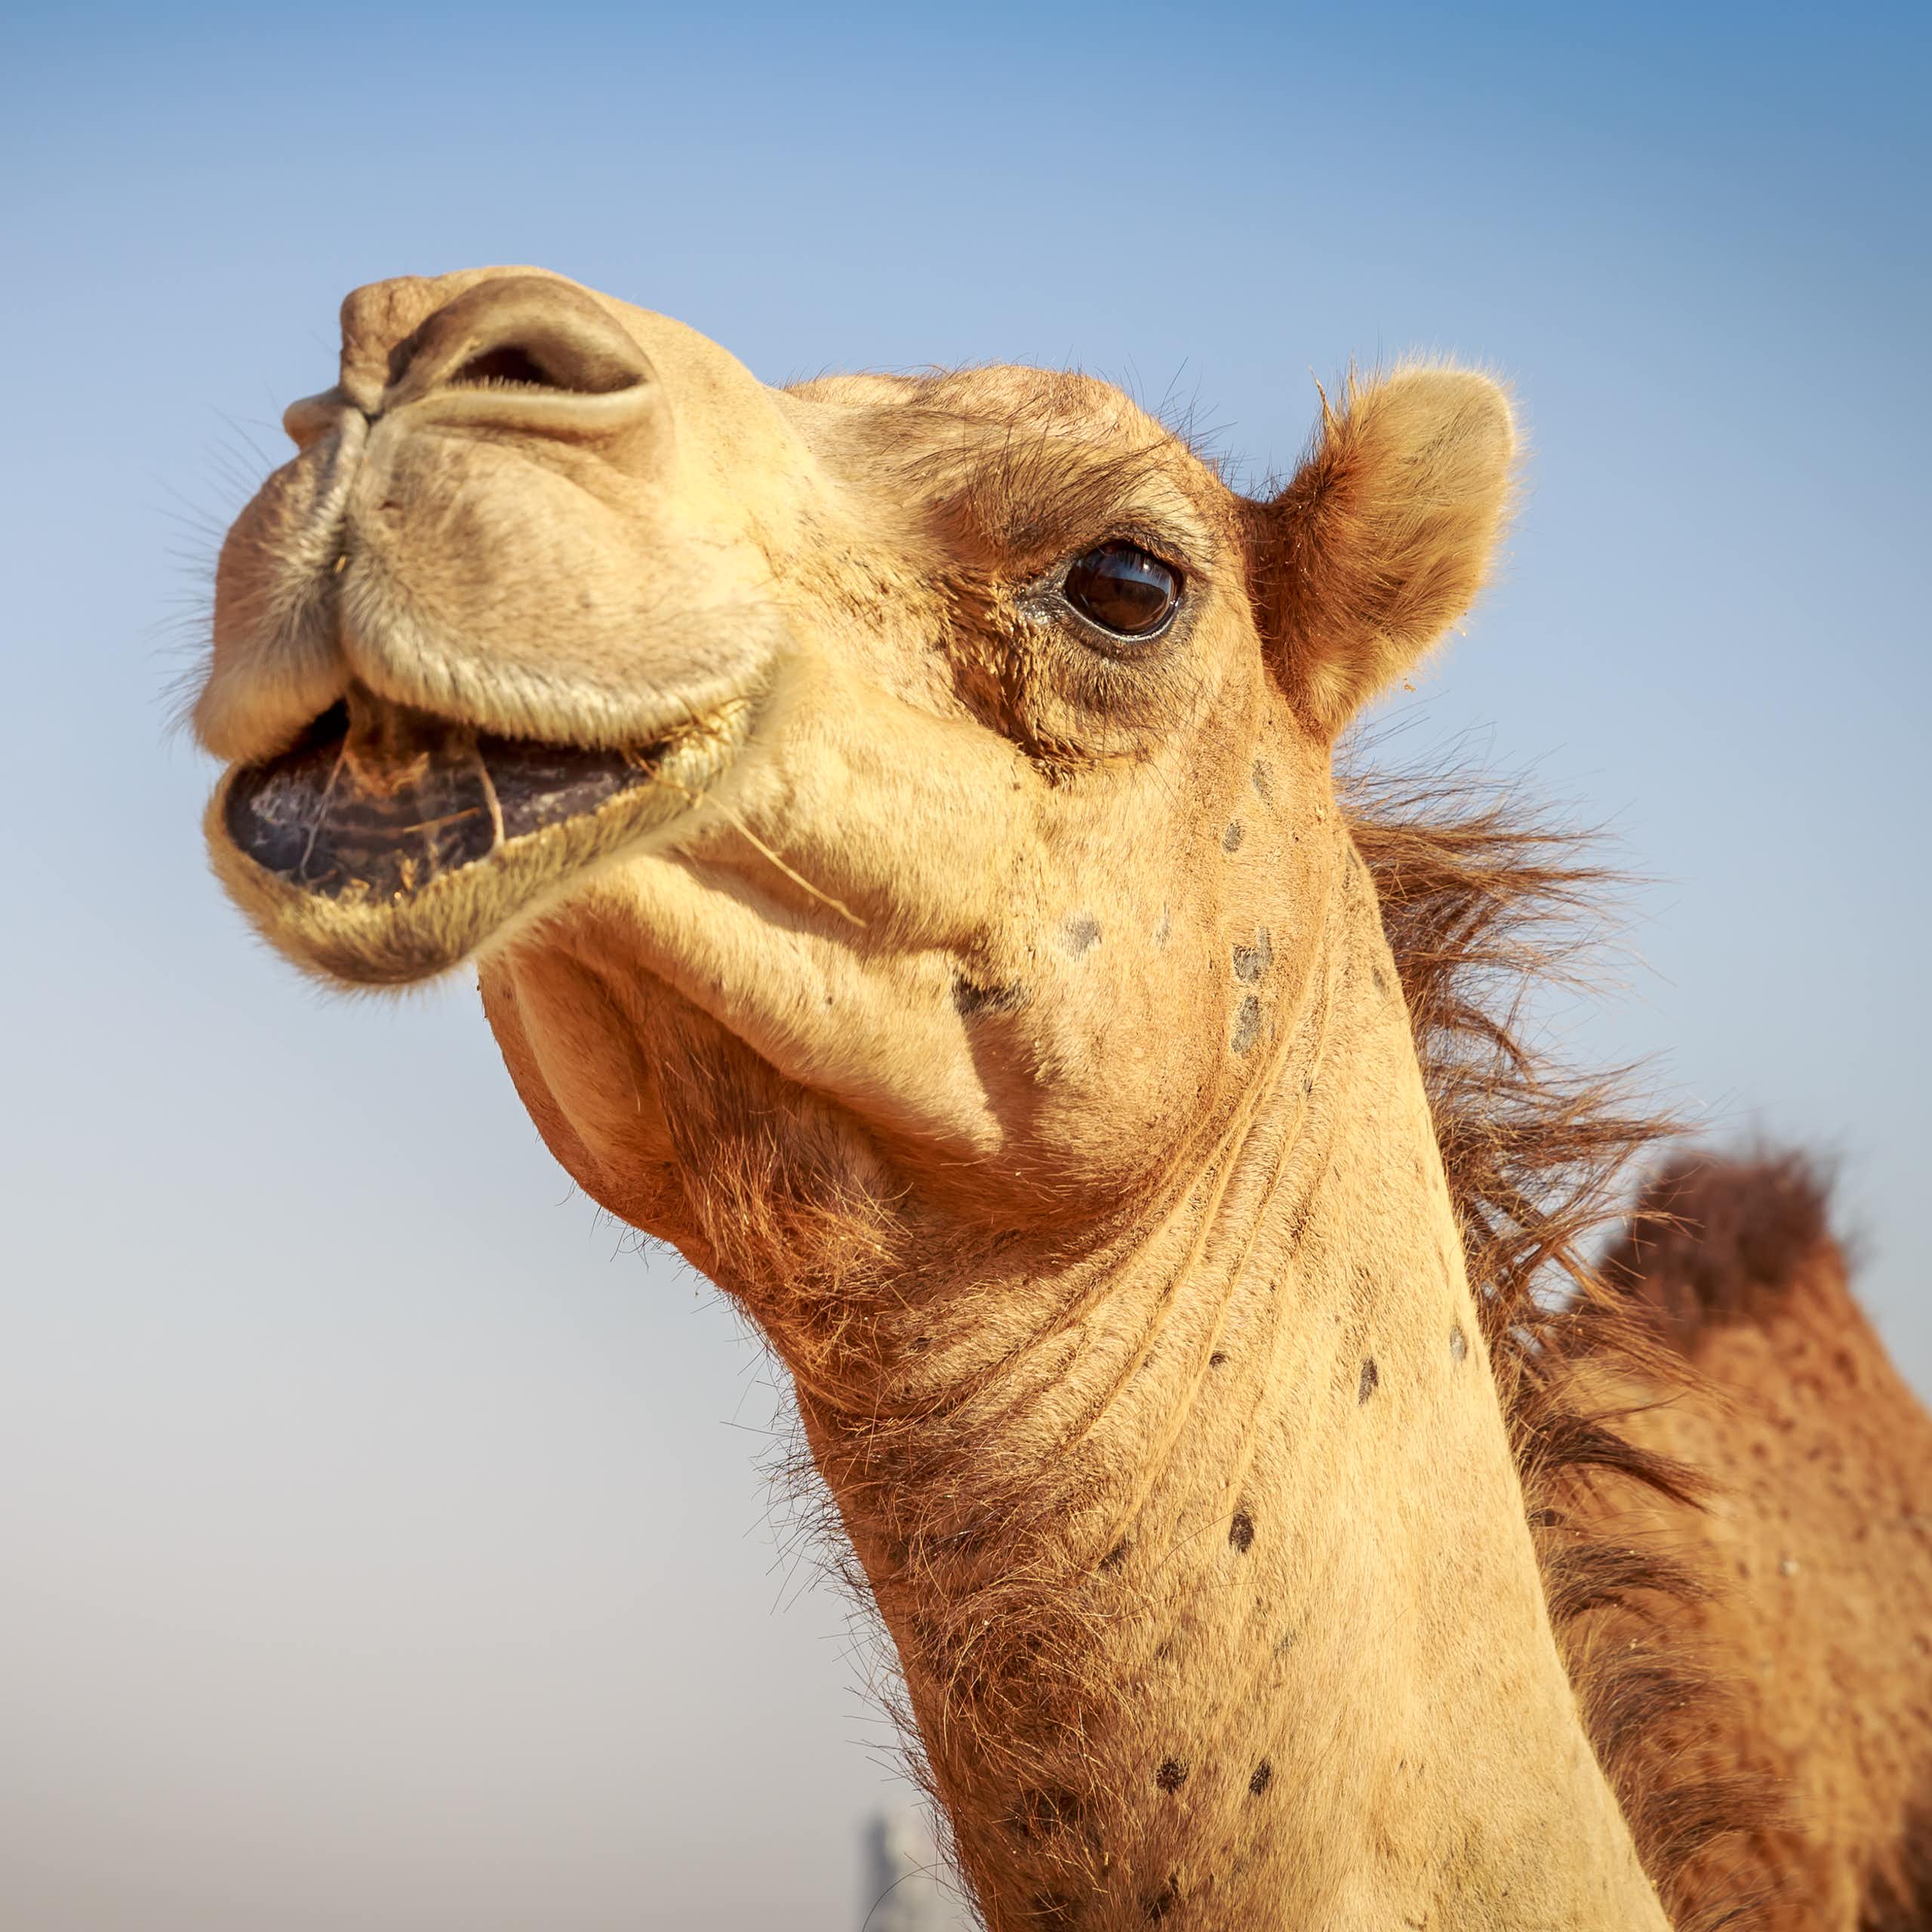 friendly camel face